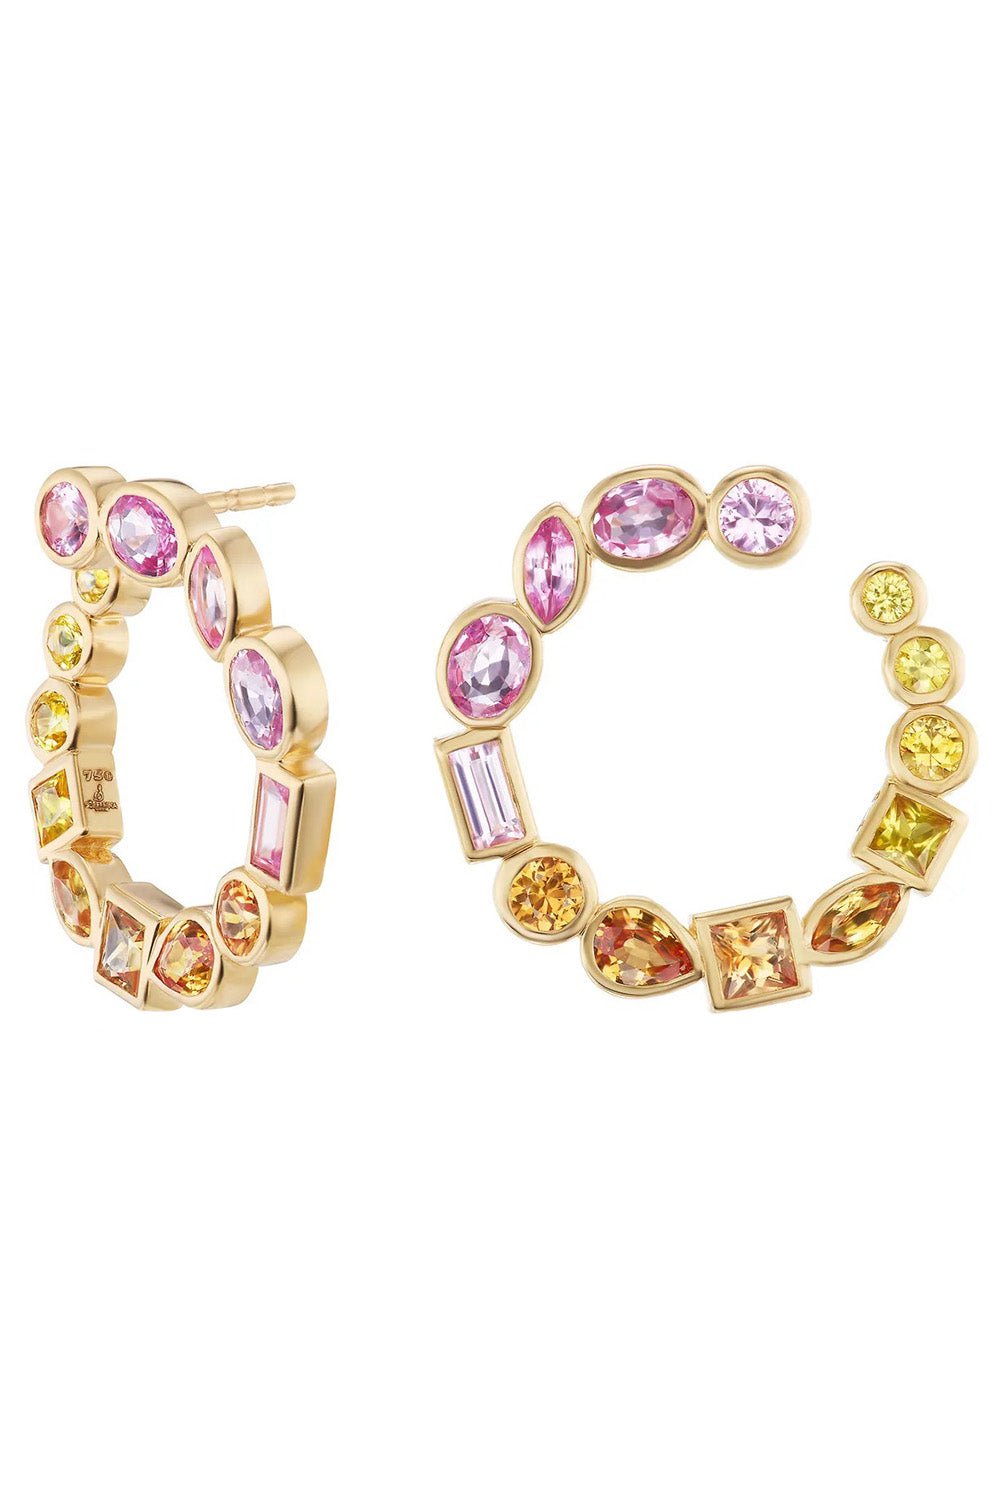 SORELLINA-Bezel Crescent Earrings-YELLOW GOLD